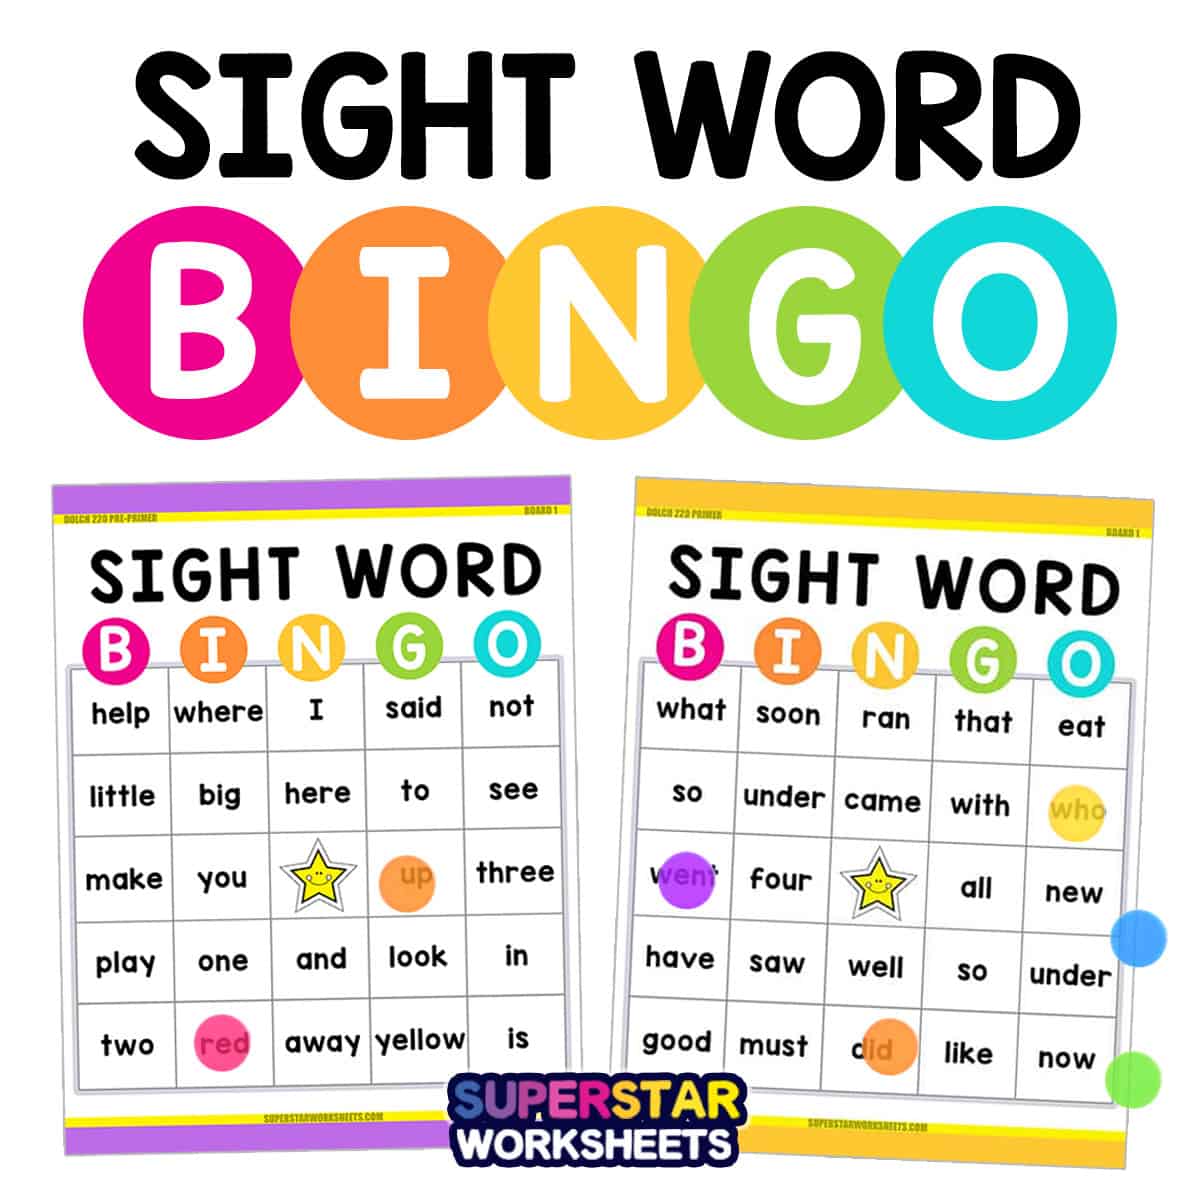 sight-word-bingo-superstar-worksheets